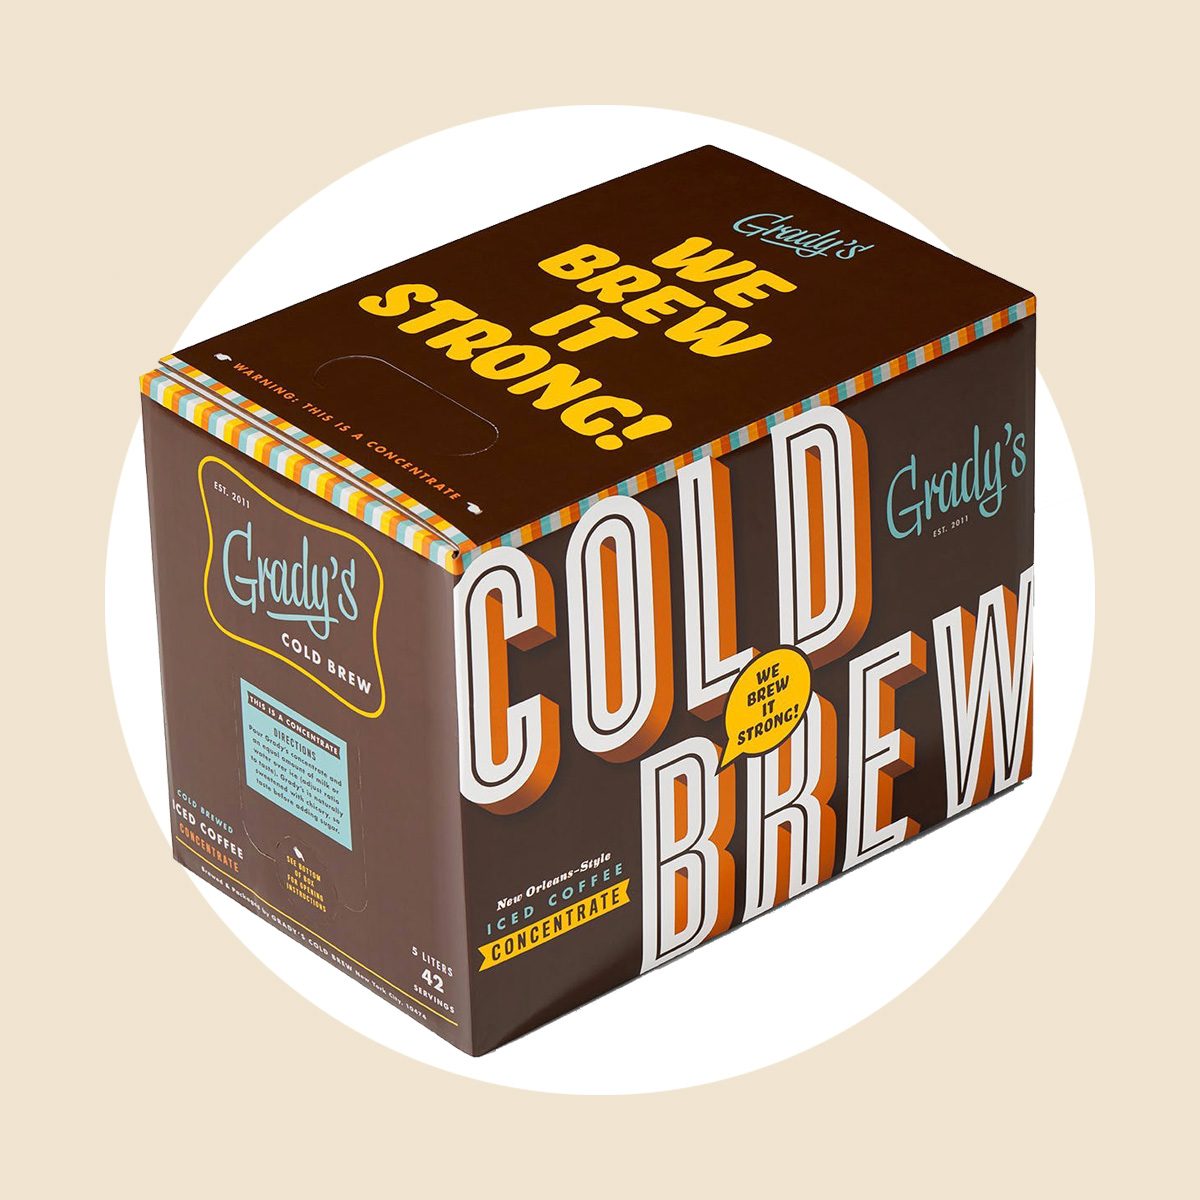 Grady Cold Brew Coffee